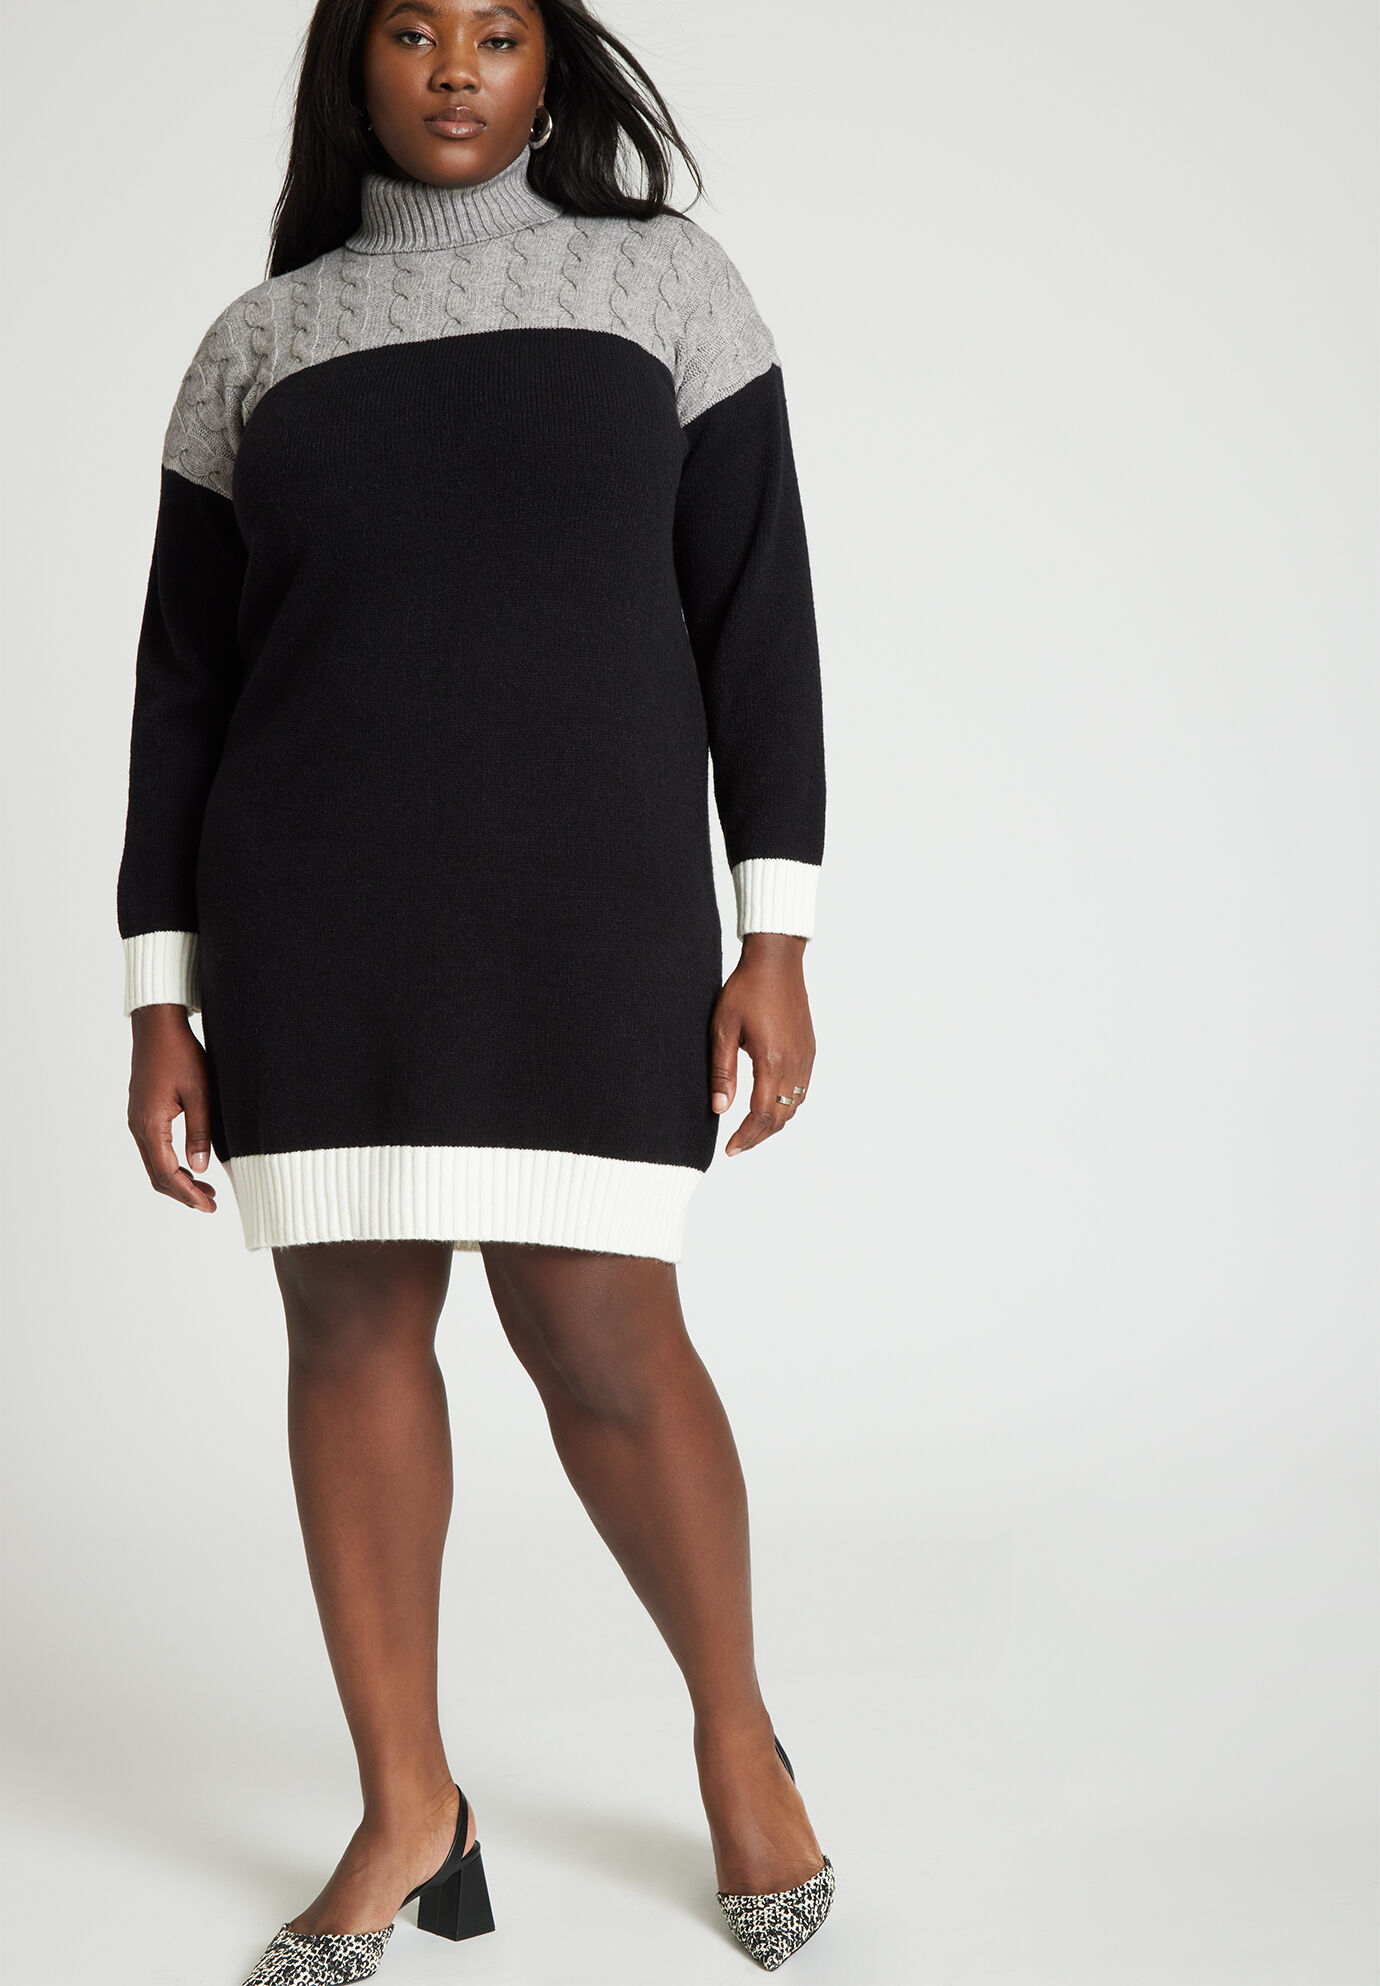 Plus Size Colorblocking Dropped Shoulder Collared Turtleneck Sweater Short Dress